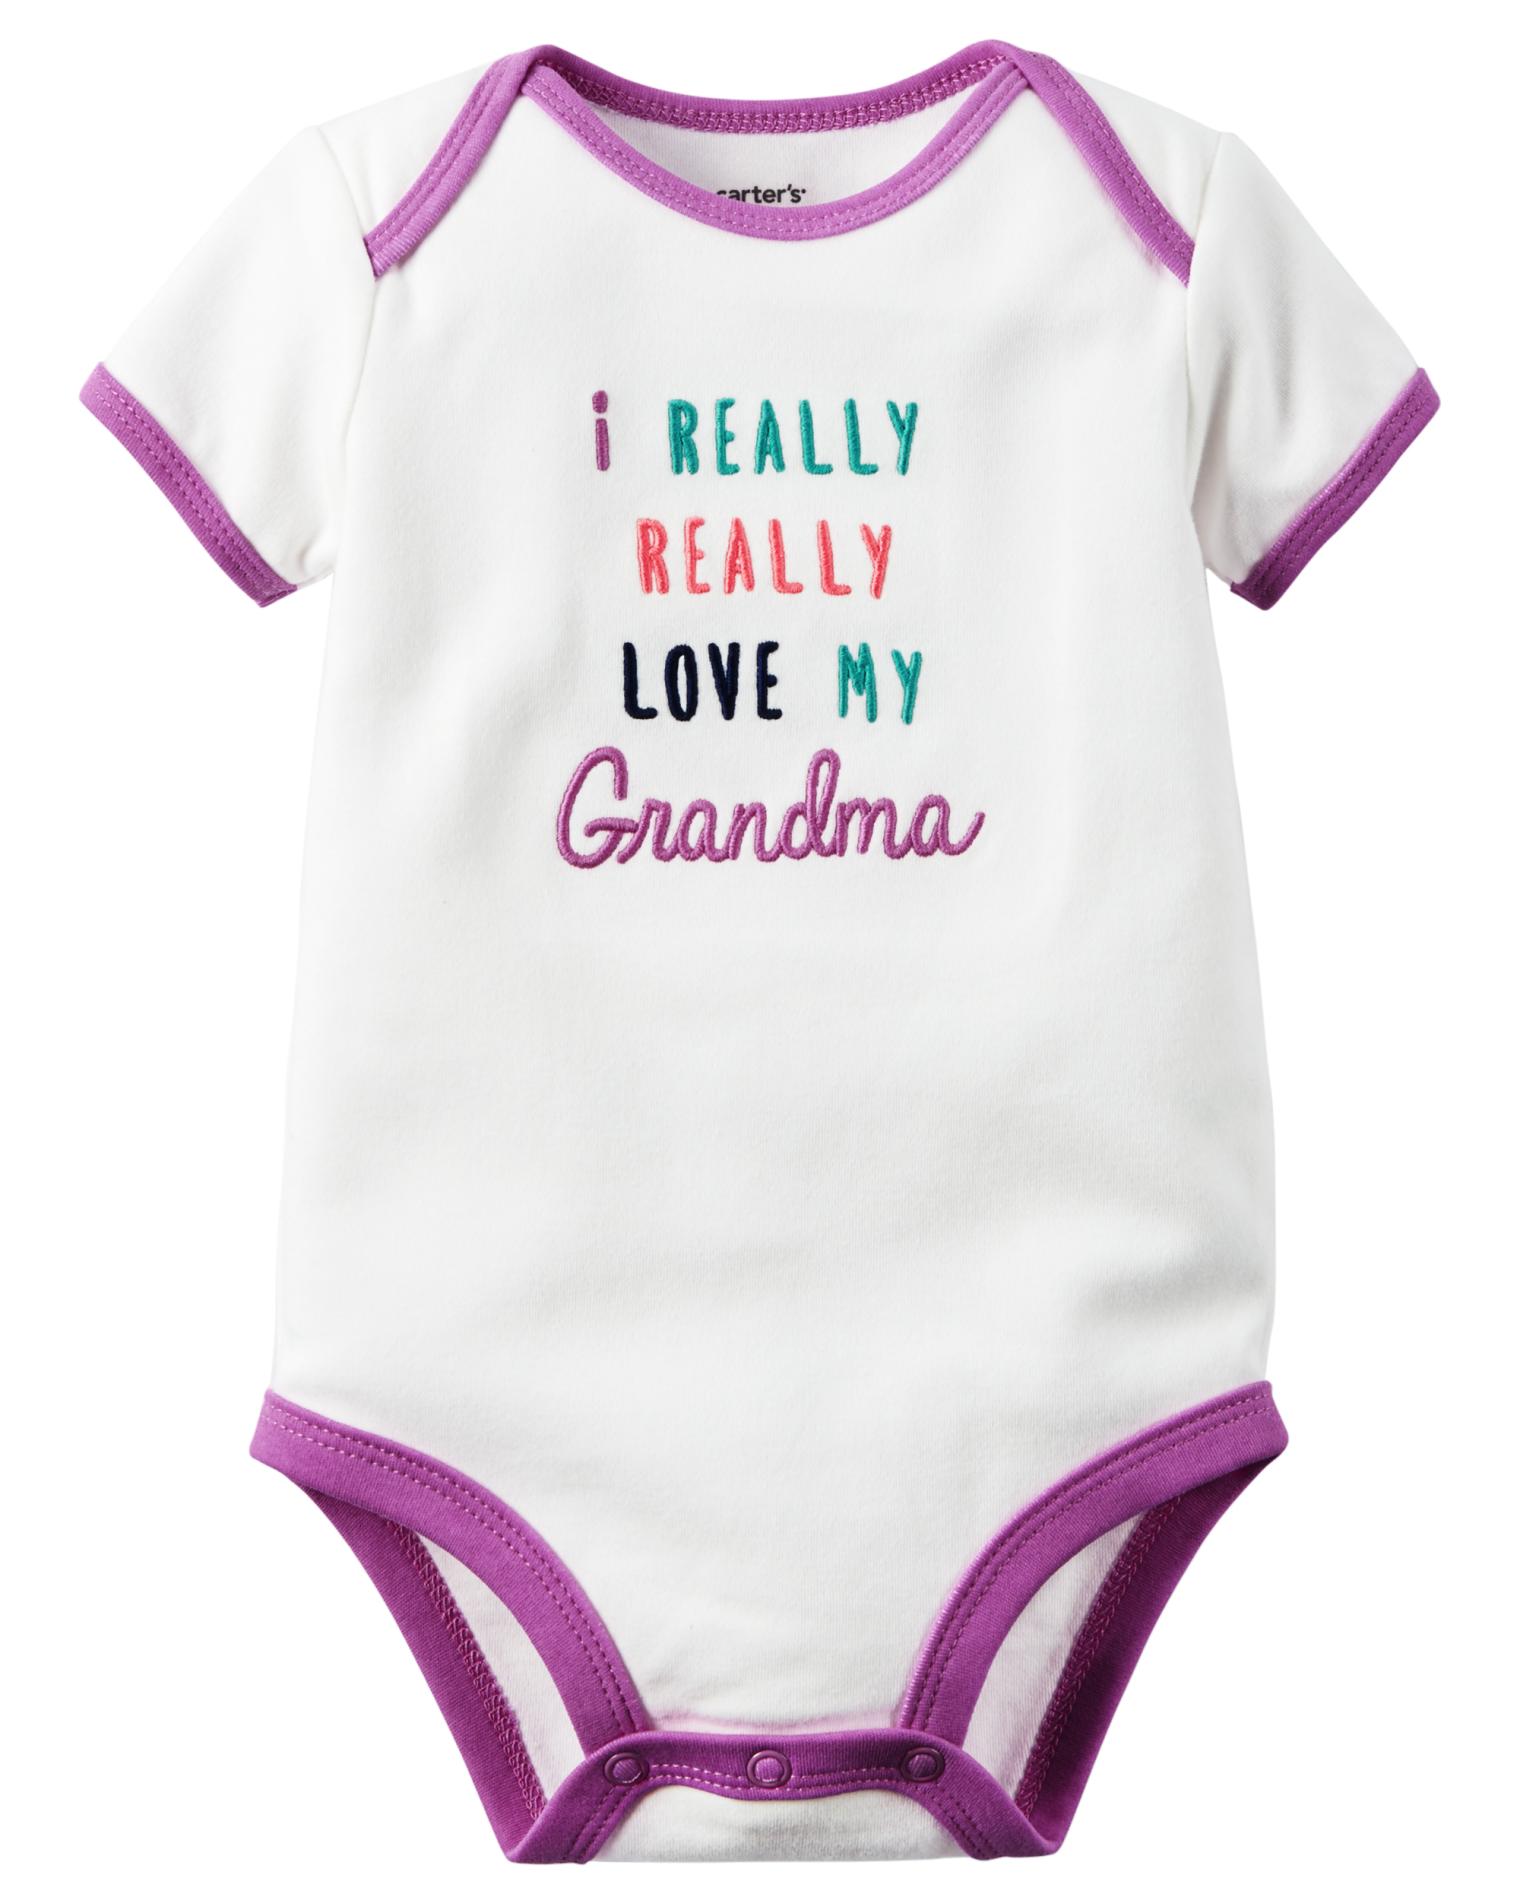 Carter's Newborn & Infant Girls' Graphic Bodysuit - Grandma